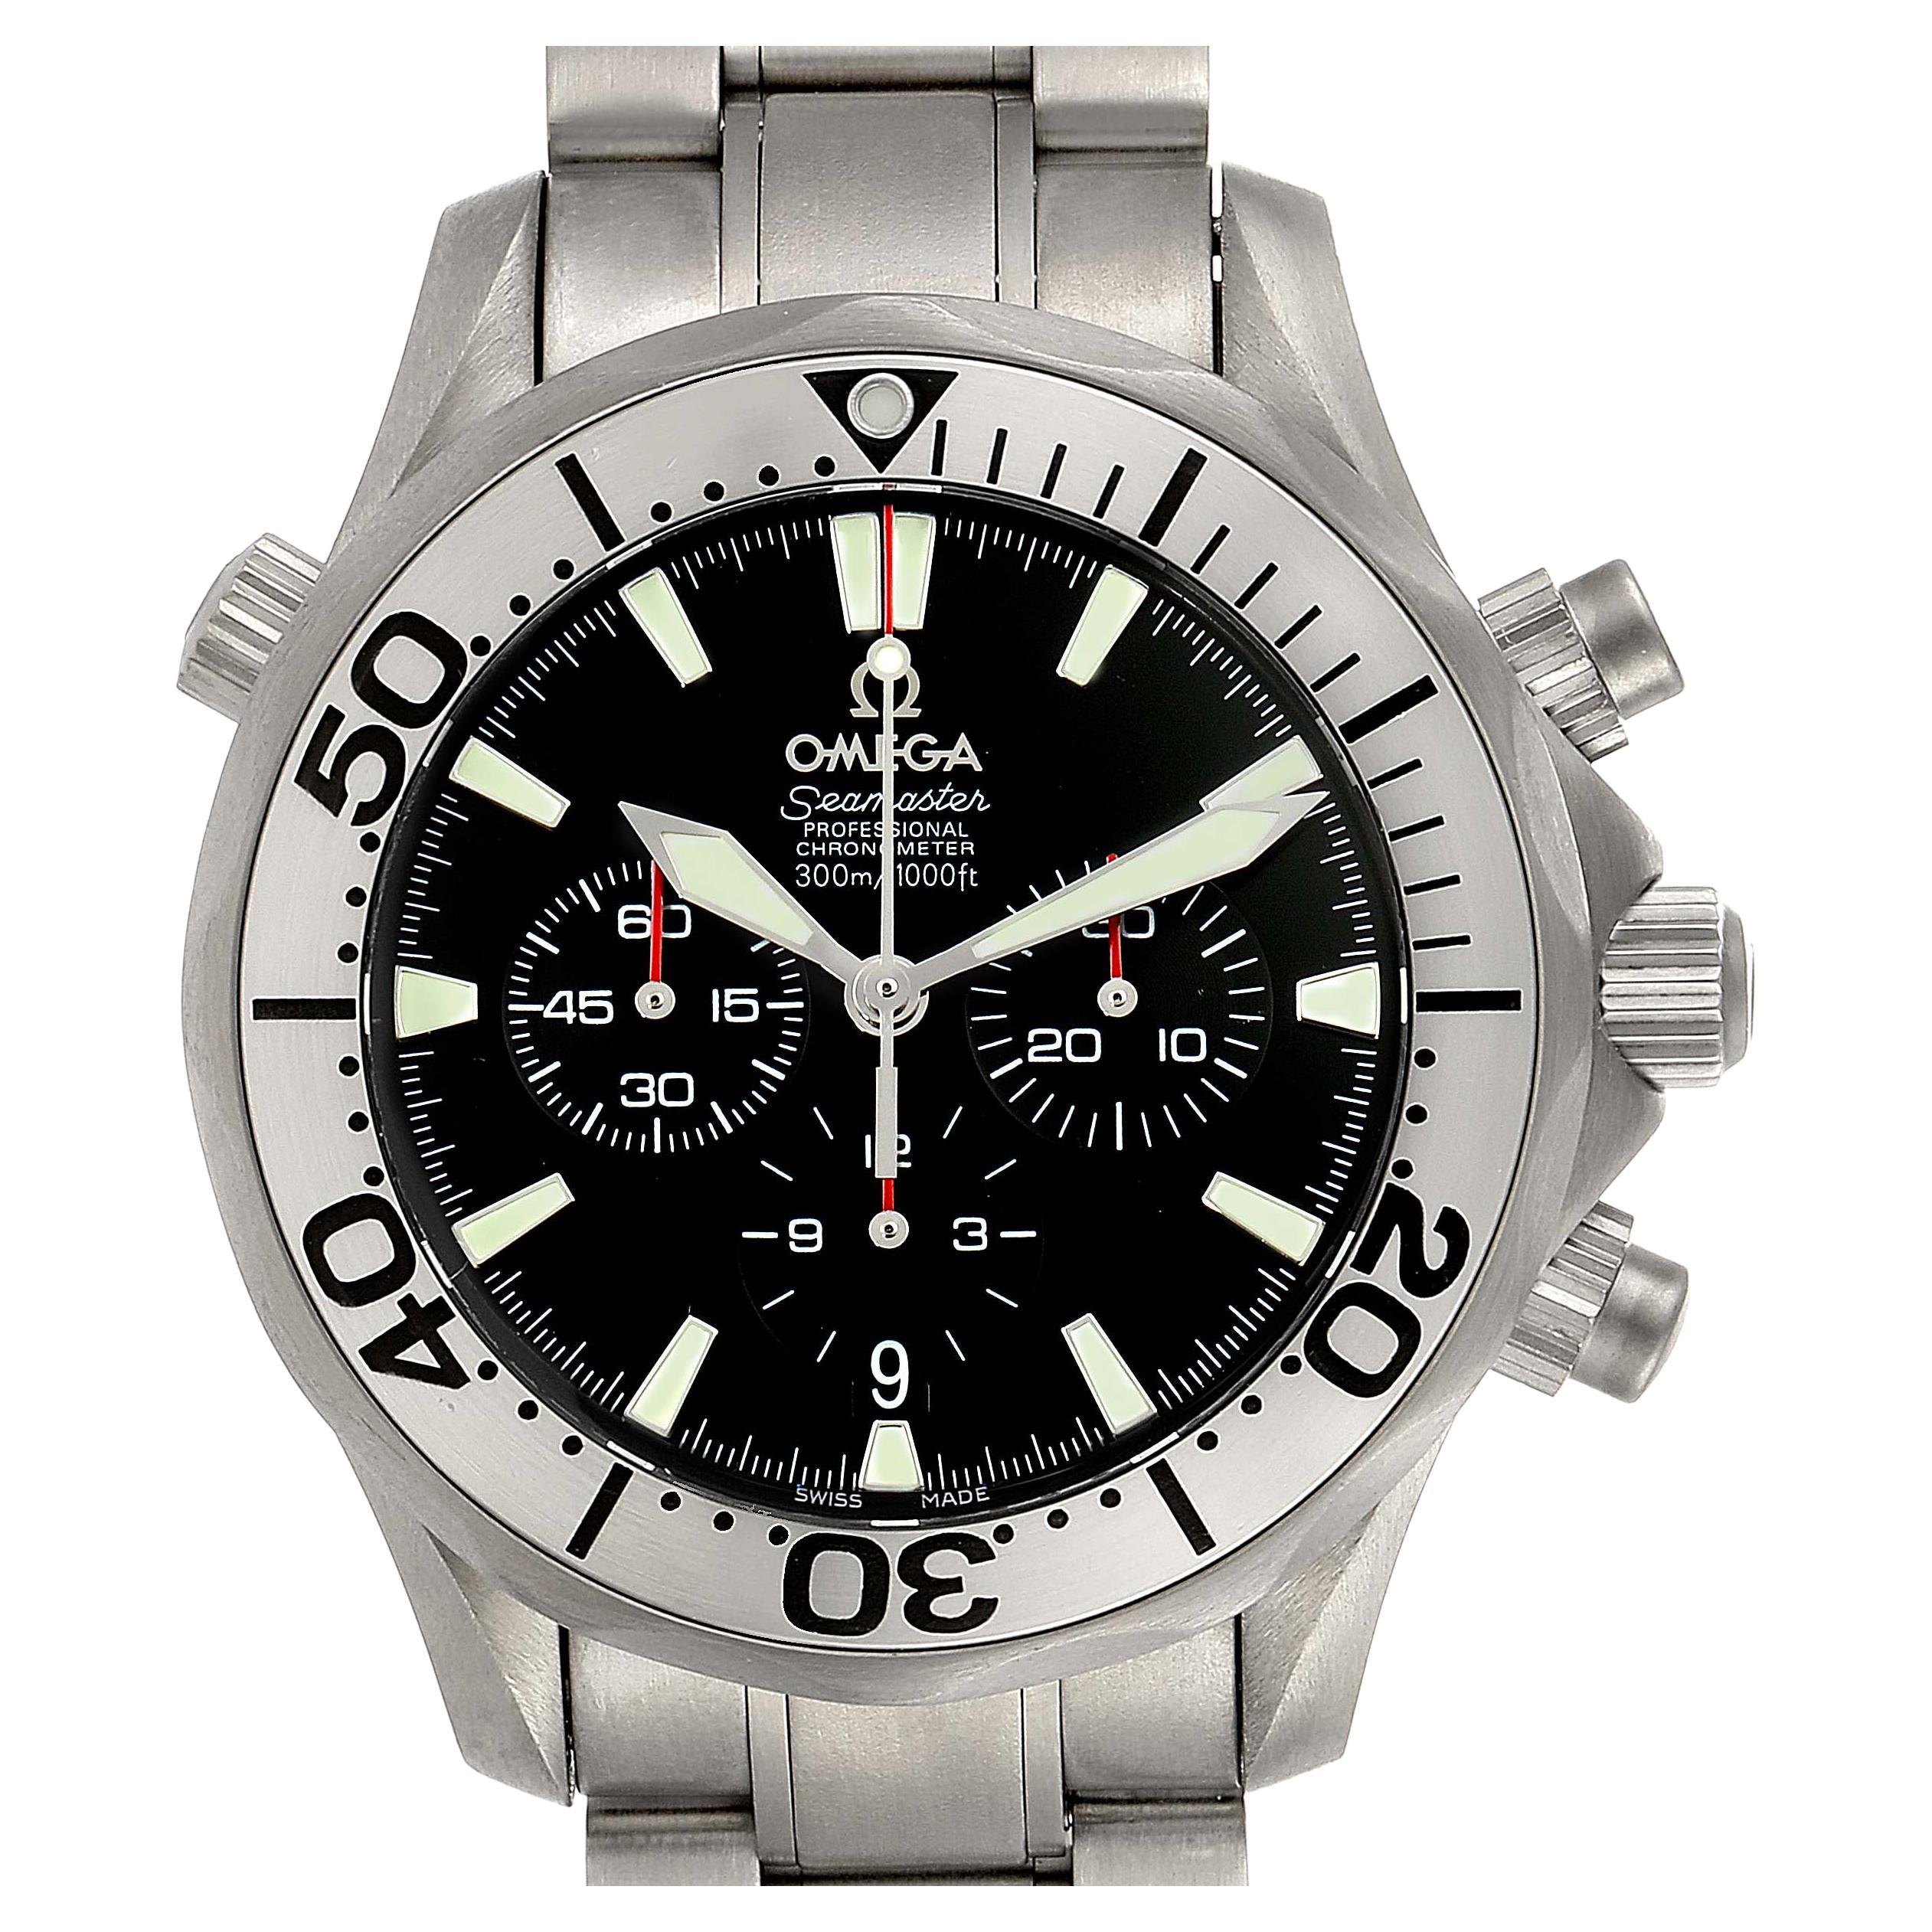 Omega Seamaster Diver Chronograph Titanium Mens Watch 2293.52.00 For Sale